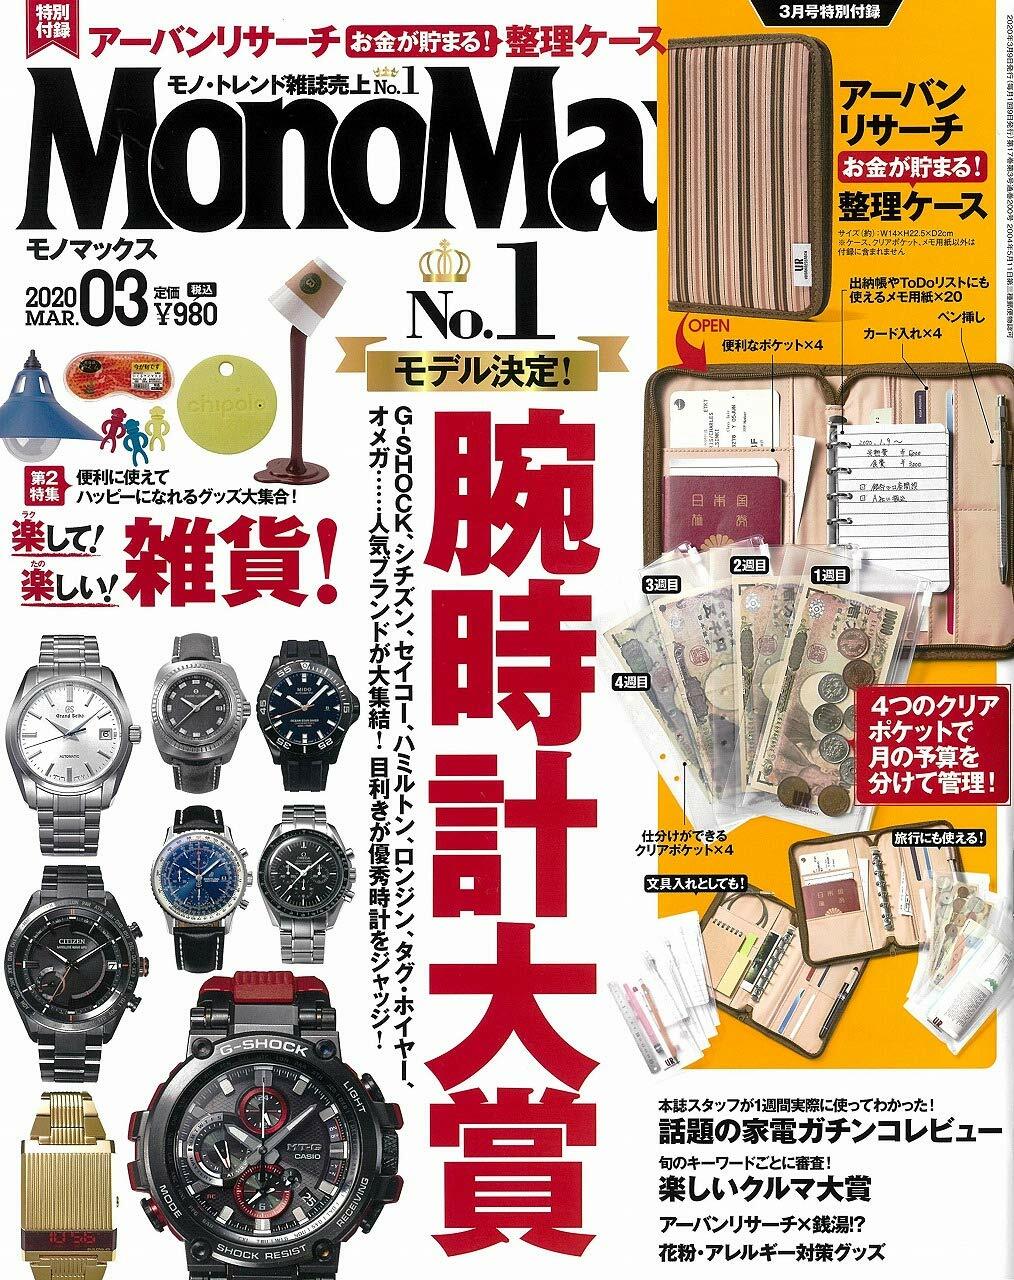 Mono Max (モノ·マックス) 2020年 03月號 [雜誌] (月刊, 雜誌)